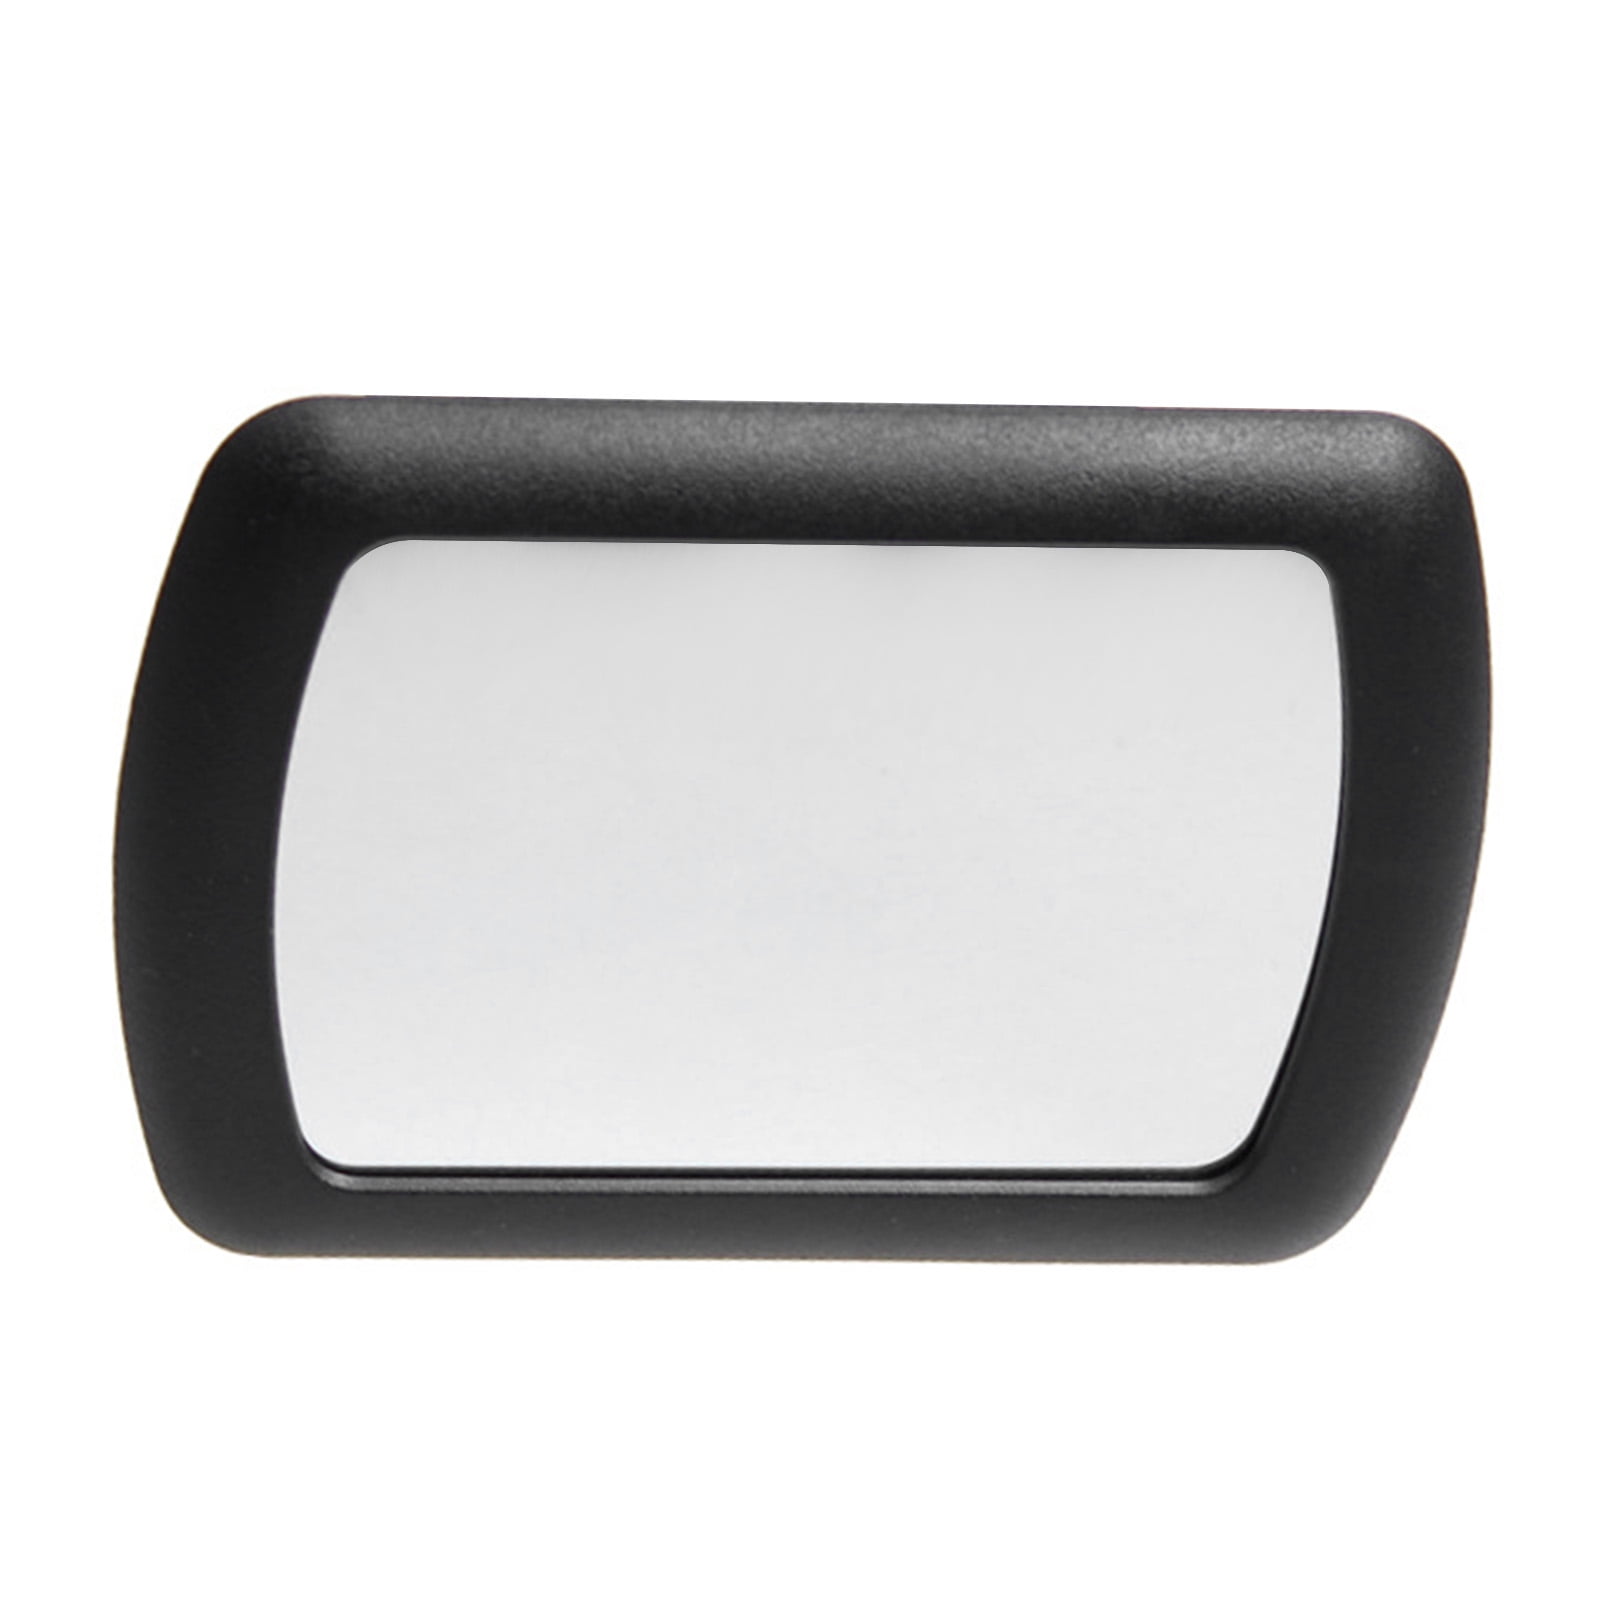 Car Makeup Mirror Car Stainless Steel Portable Auto Sun-Shading Visor HD  Mirrors Car Interior Mirror Universal Car-styling